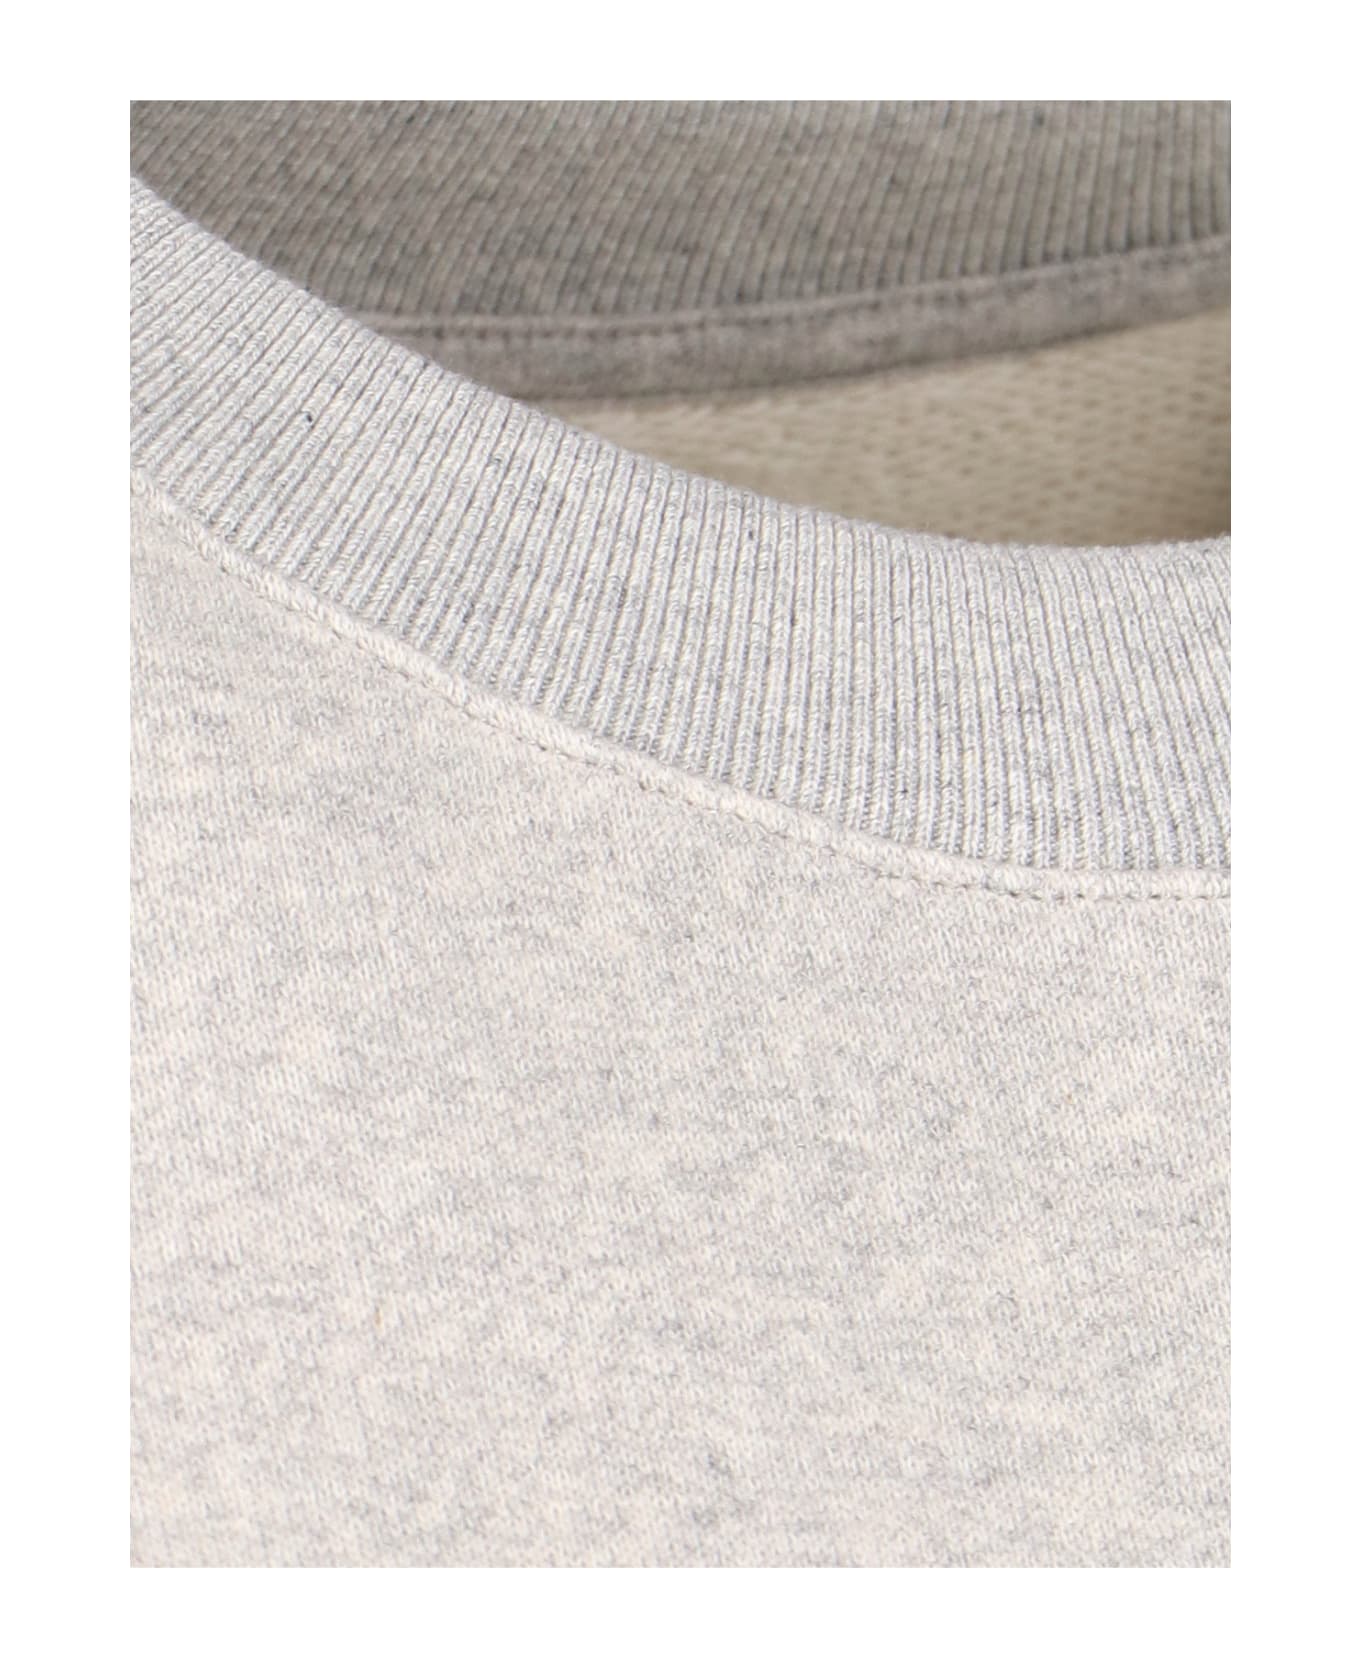 Jil Sander Oversize Logo Sweatshirt - Gray